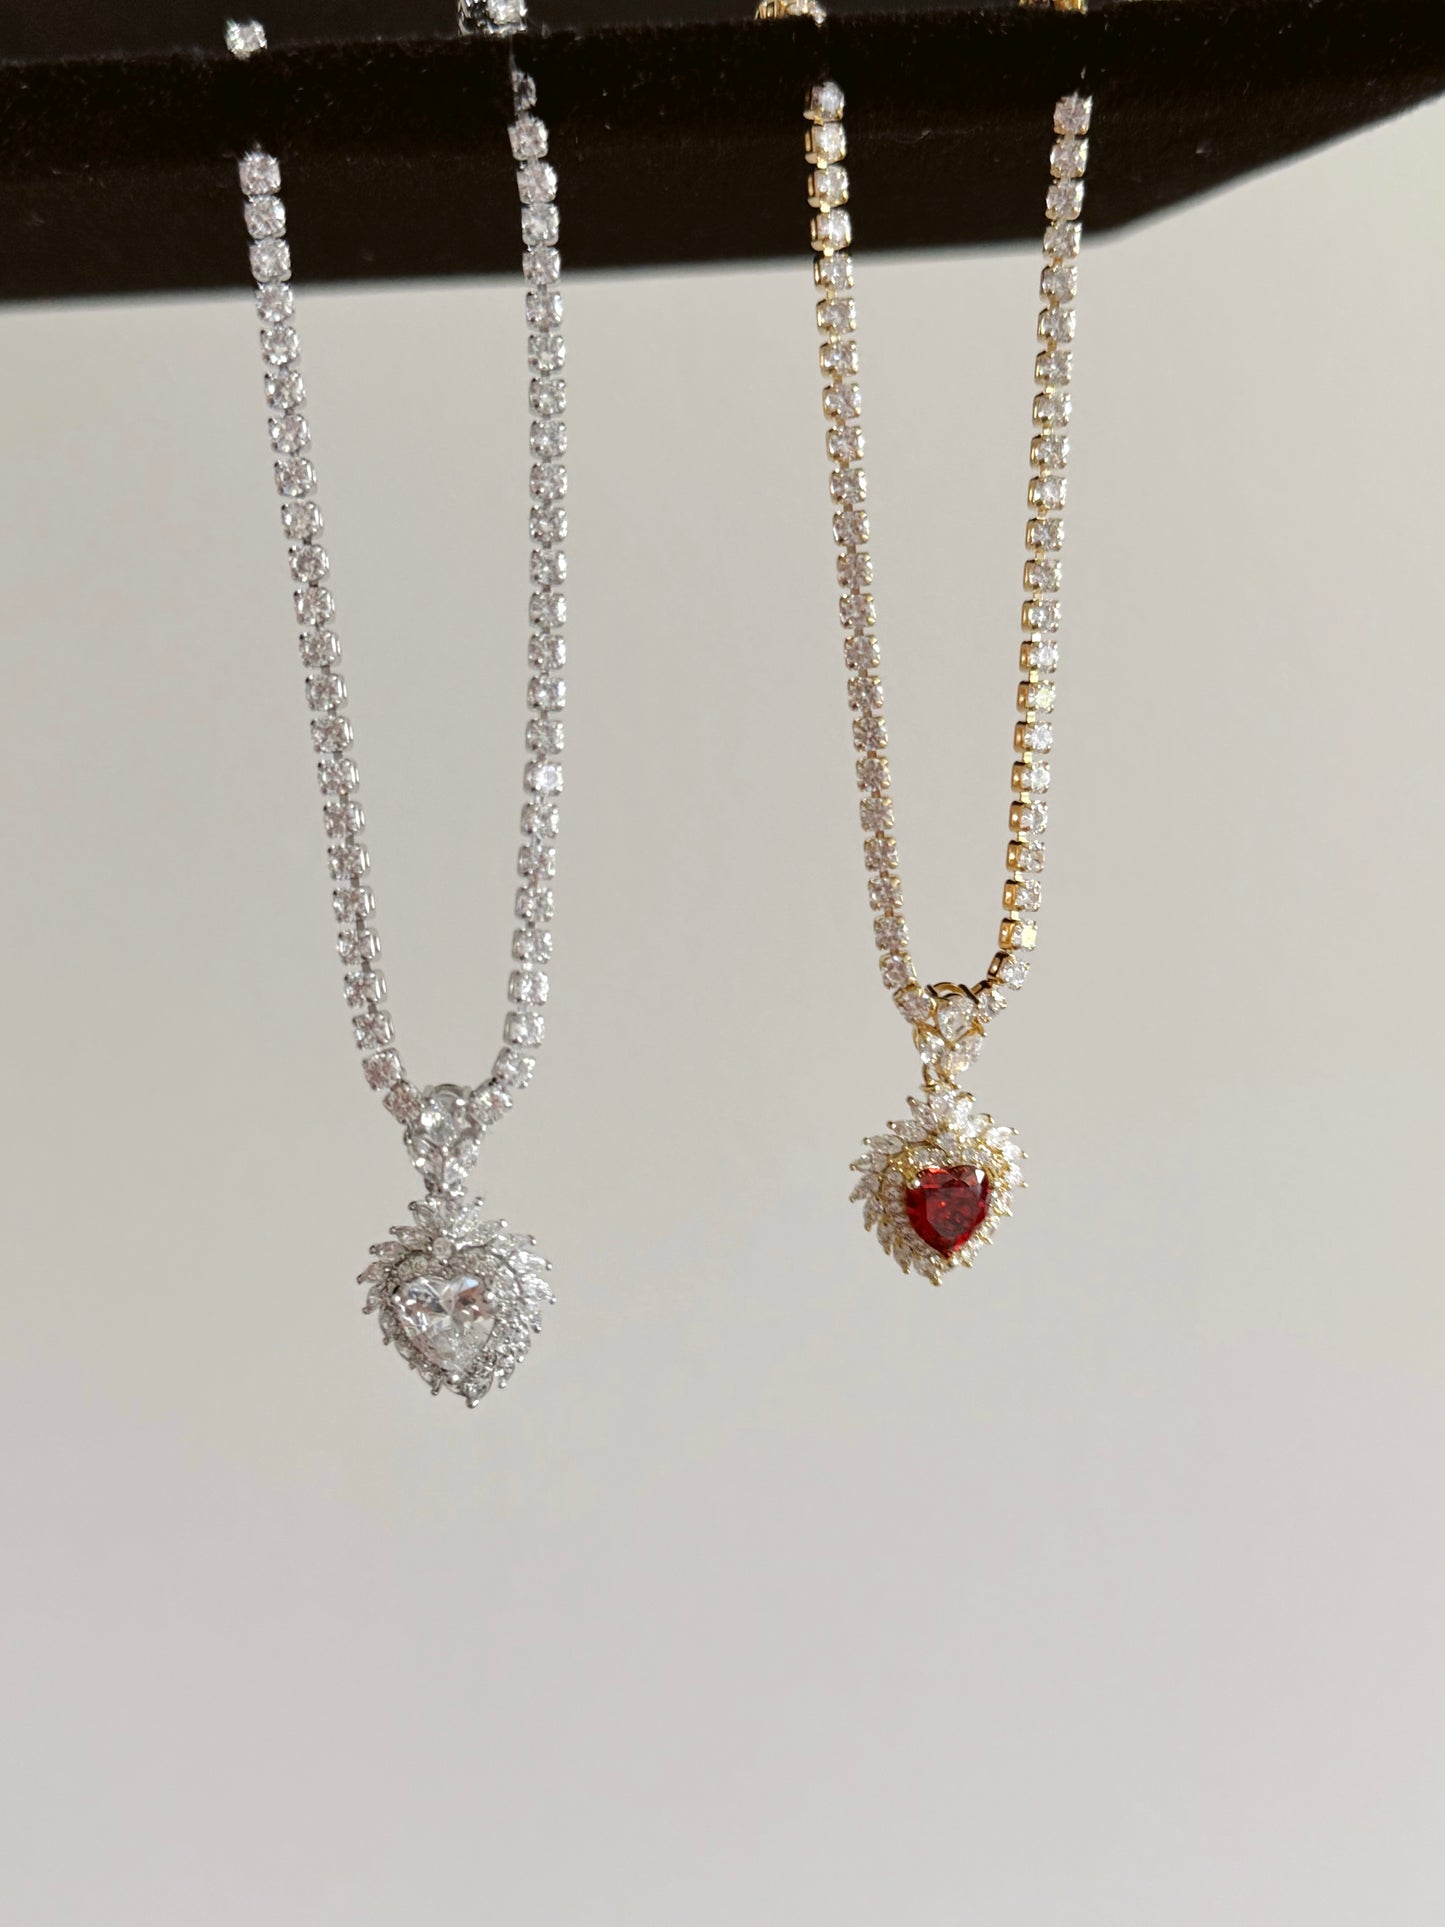 Tennis heart necklaces